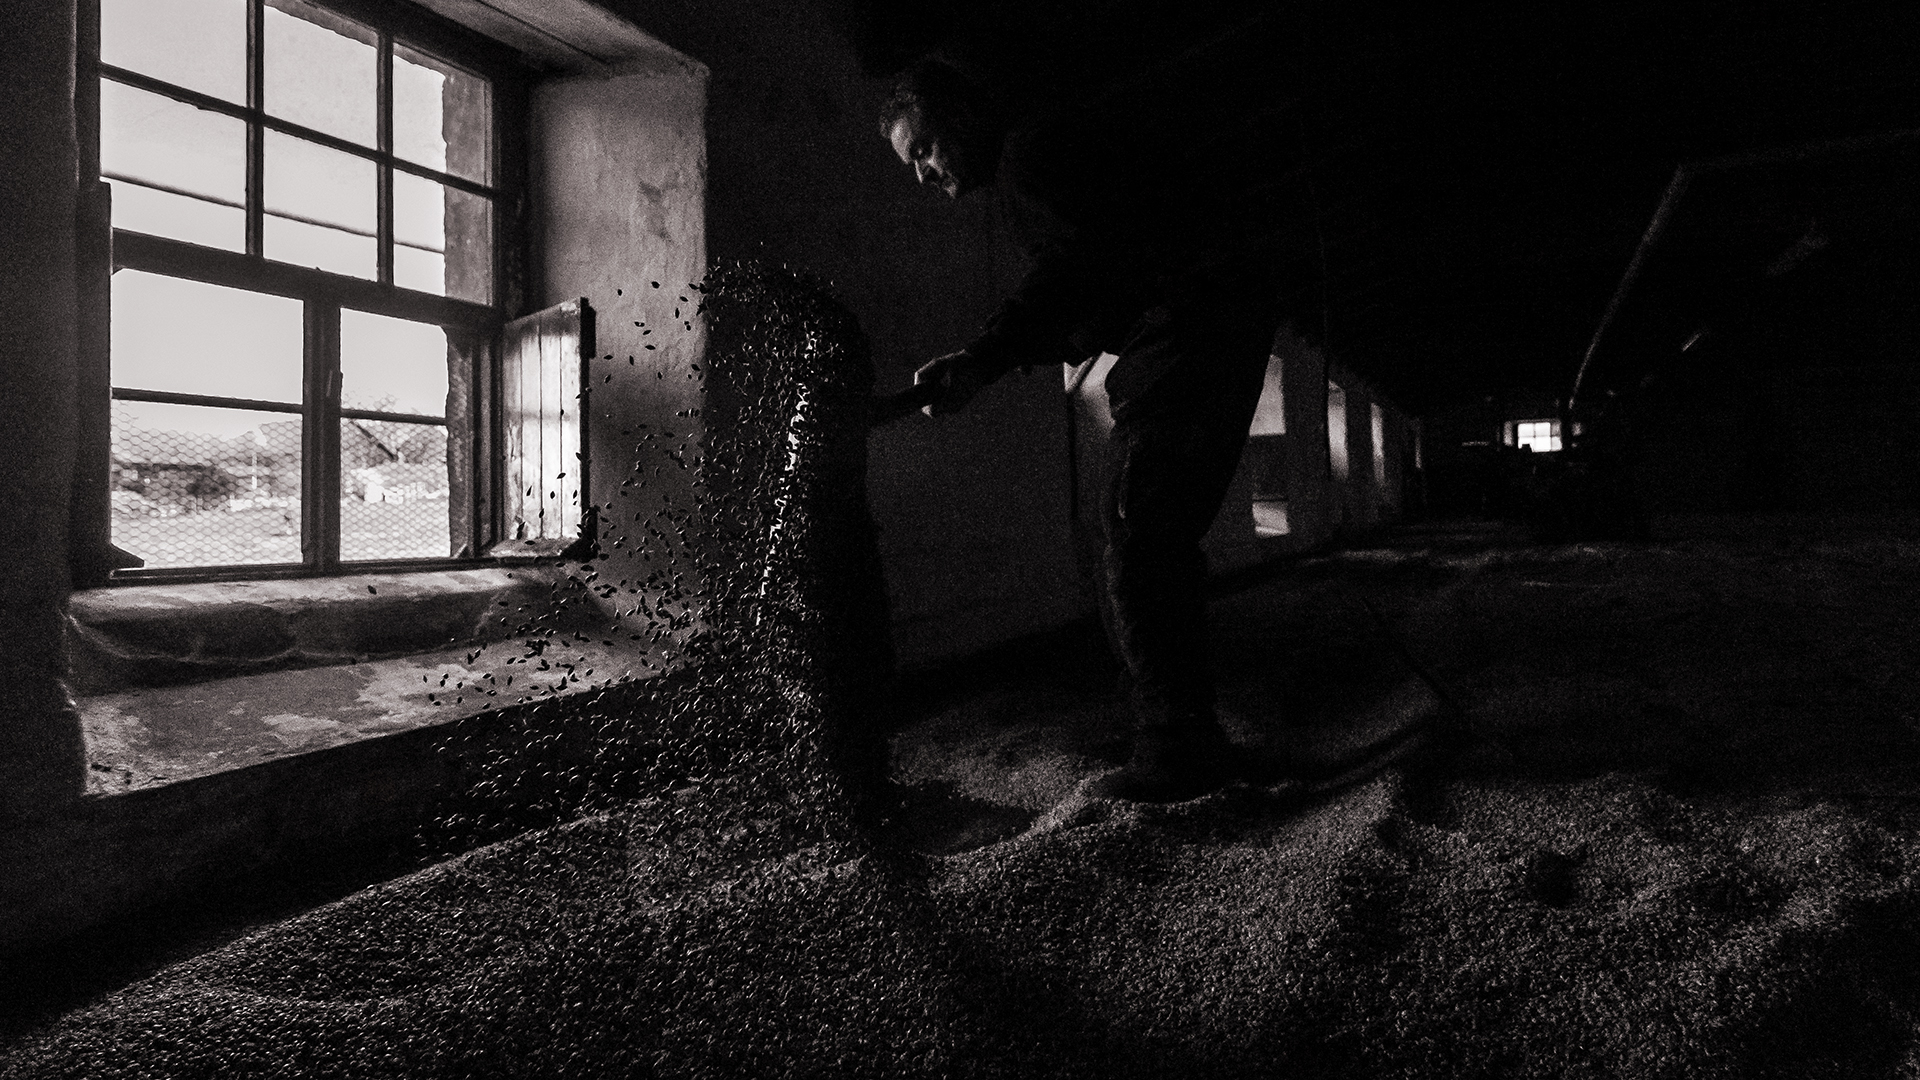 Alan Munson turns barley on the malting floor at Scotland's Highland Park Distillery. Photo ©2017, Mark Gillespie/CaskStrength Media.